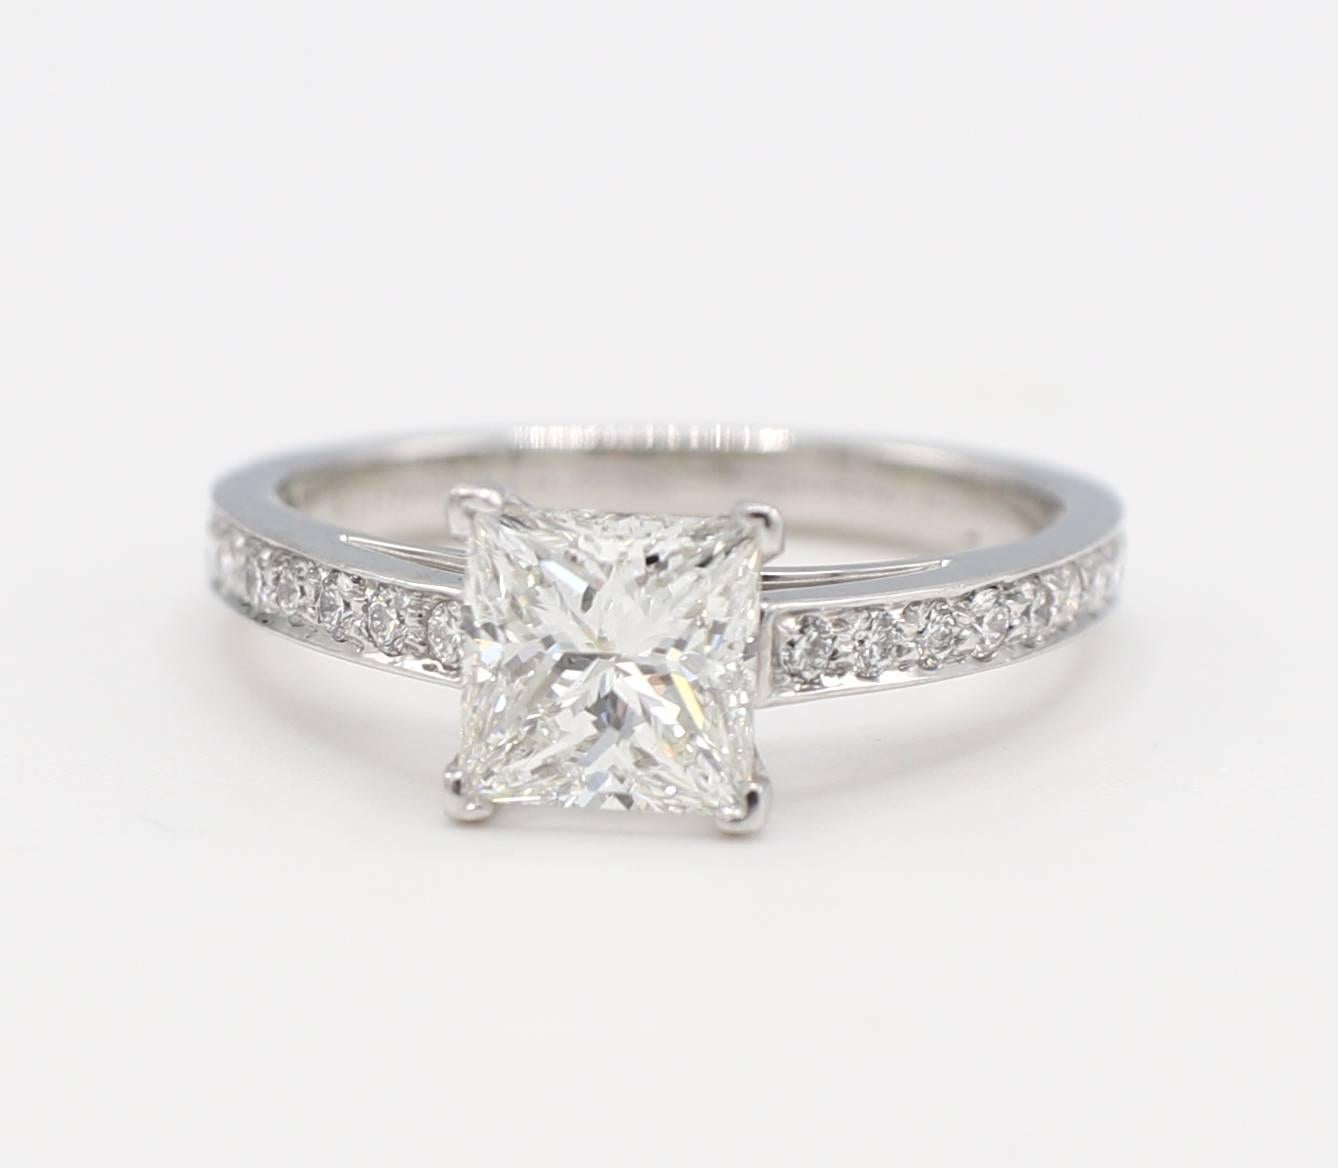 Tiffany & Co. 1.08 Carat H VVS1 Princess Cut Diamond Platinum Engagement Ring 
GIA Report number: 6224382482
T&Co.M07291768, 28443927
Diamond: 1.08 carat square modified brilliant H VVS1
Accent diamonds: Approx. .20 CTW G VS
Size: 5.5 (US)
Height: